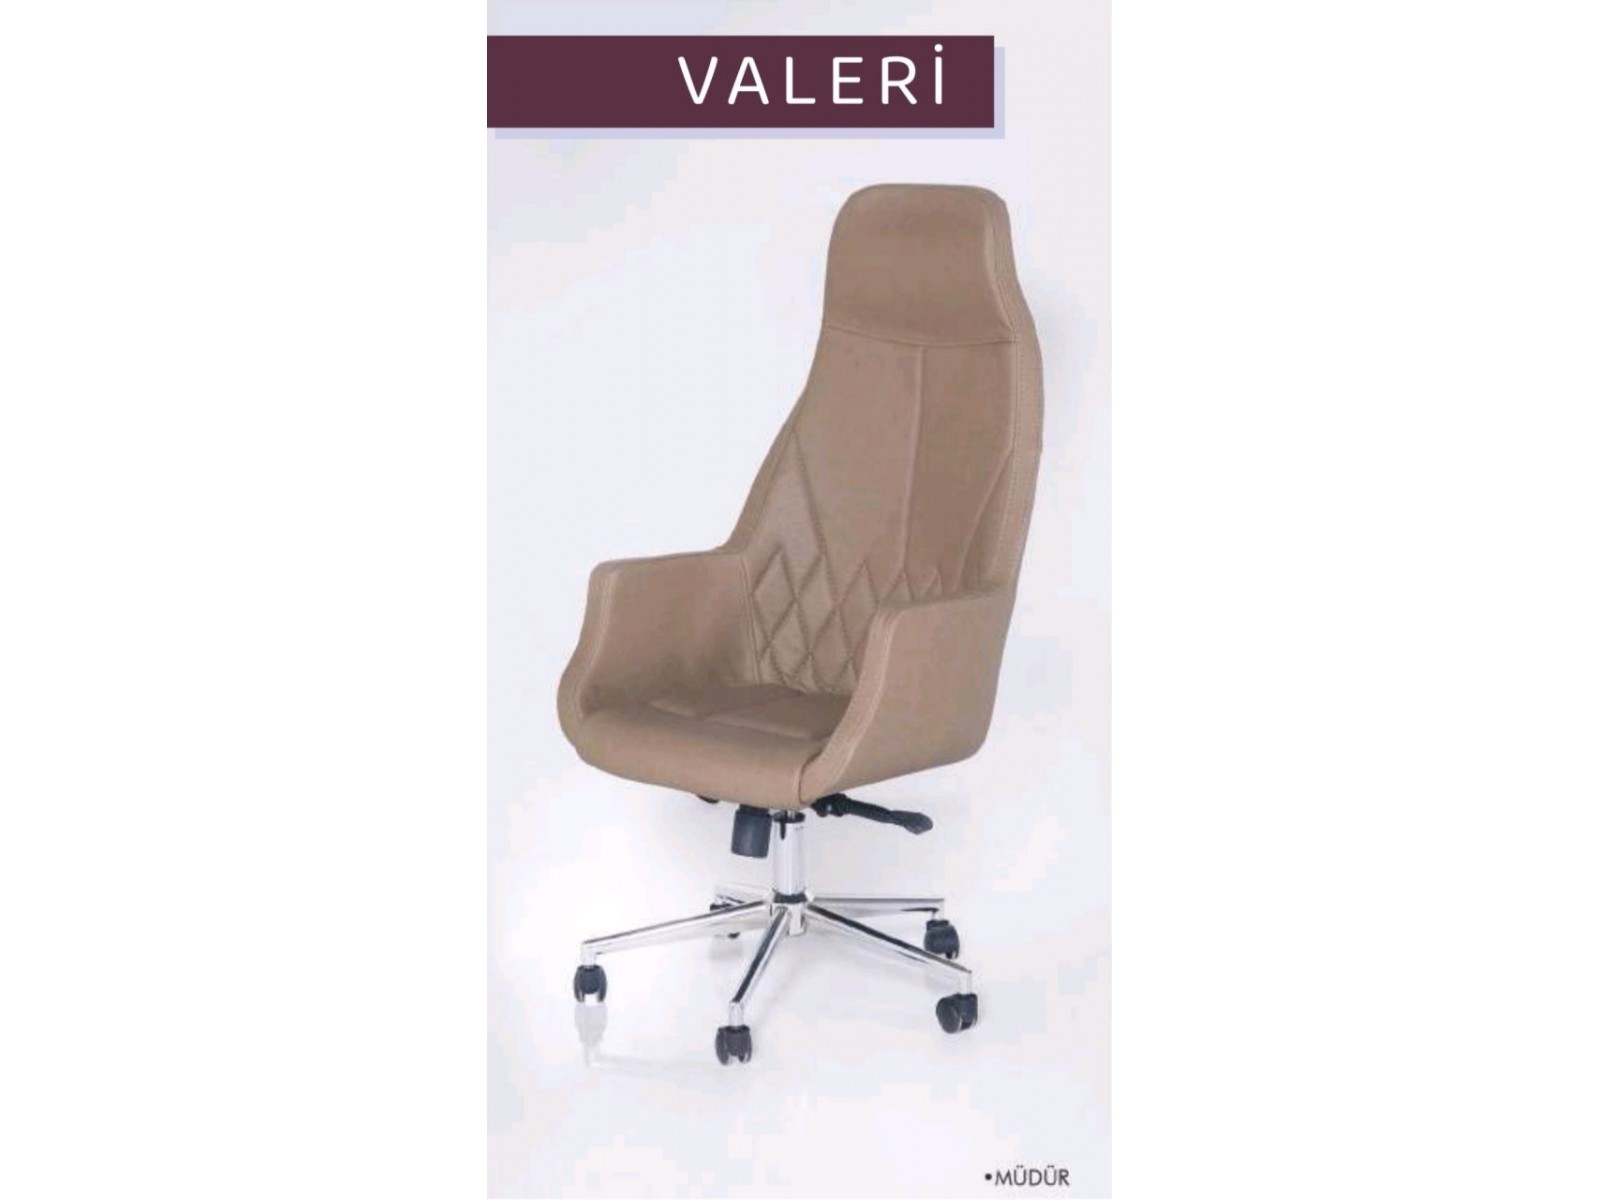 Valeri makam koltuğu